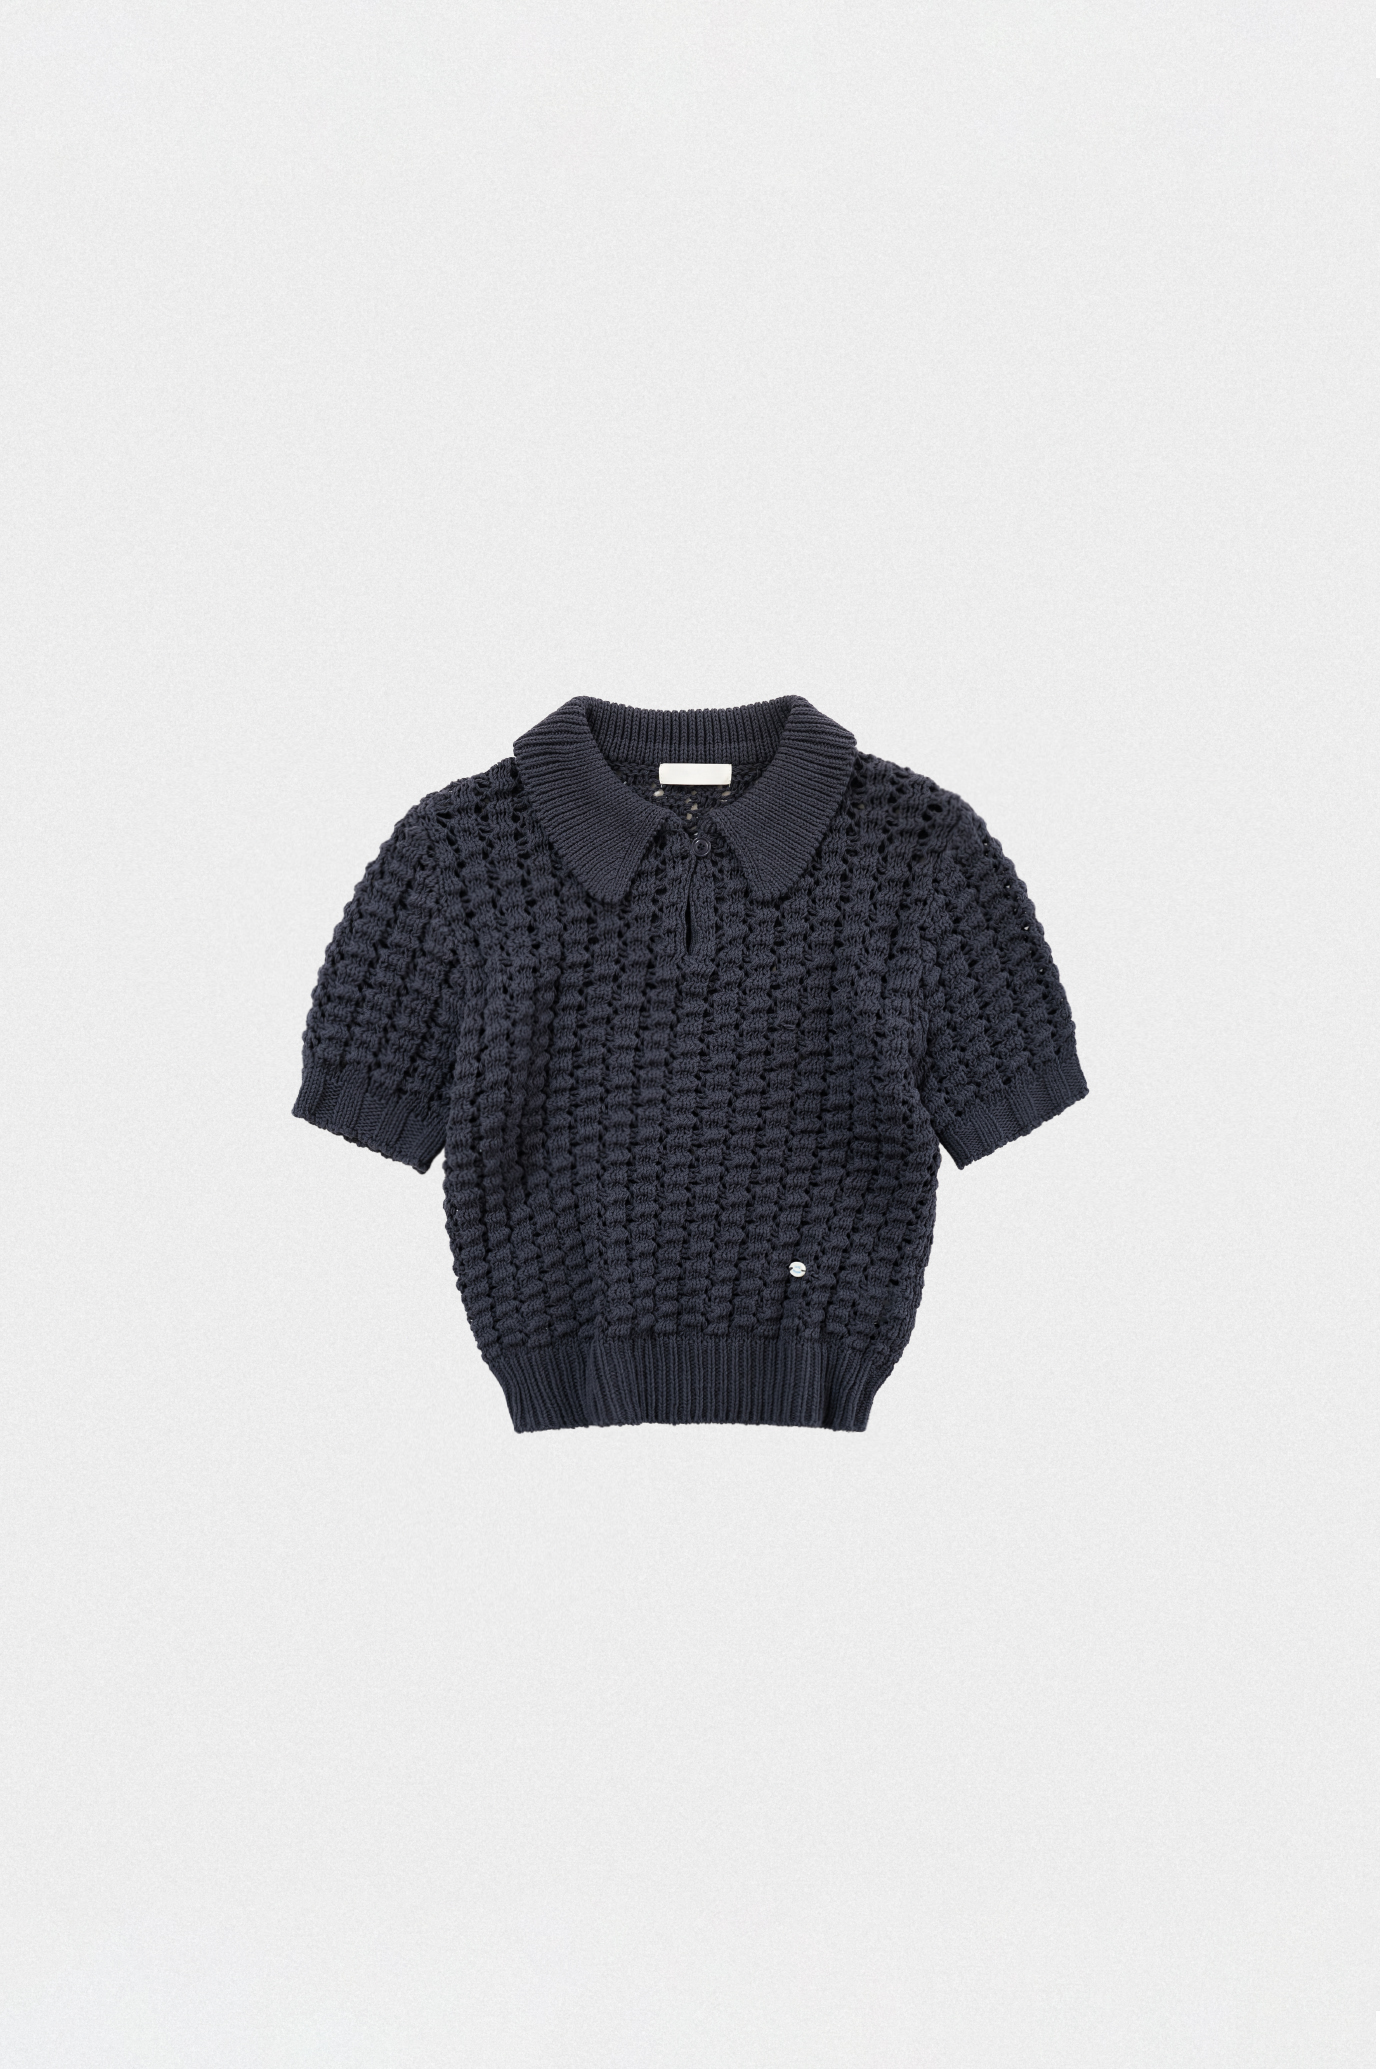 19968_Crochet Collar Knit [ New Season / 10% DC ] 21일 PM 5 마감